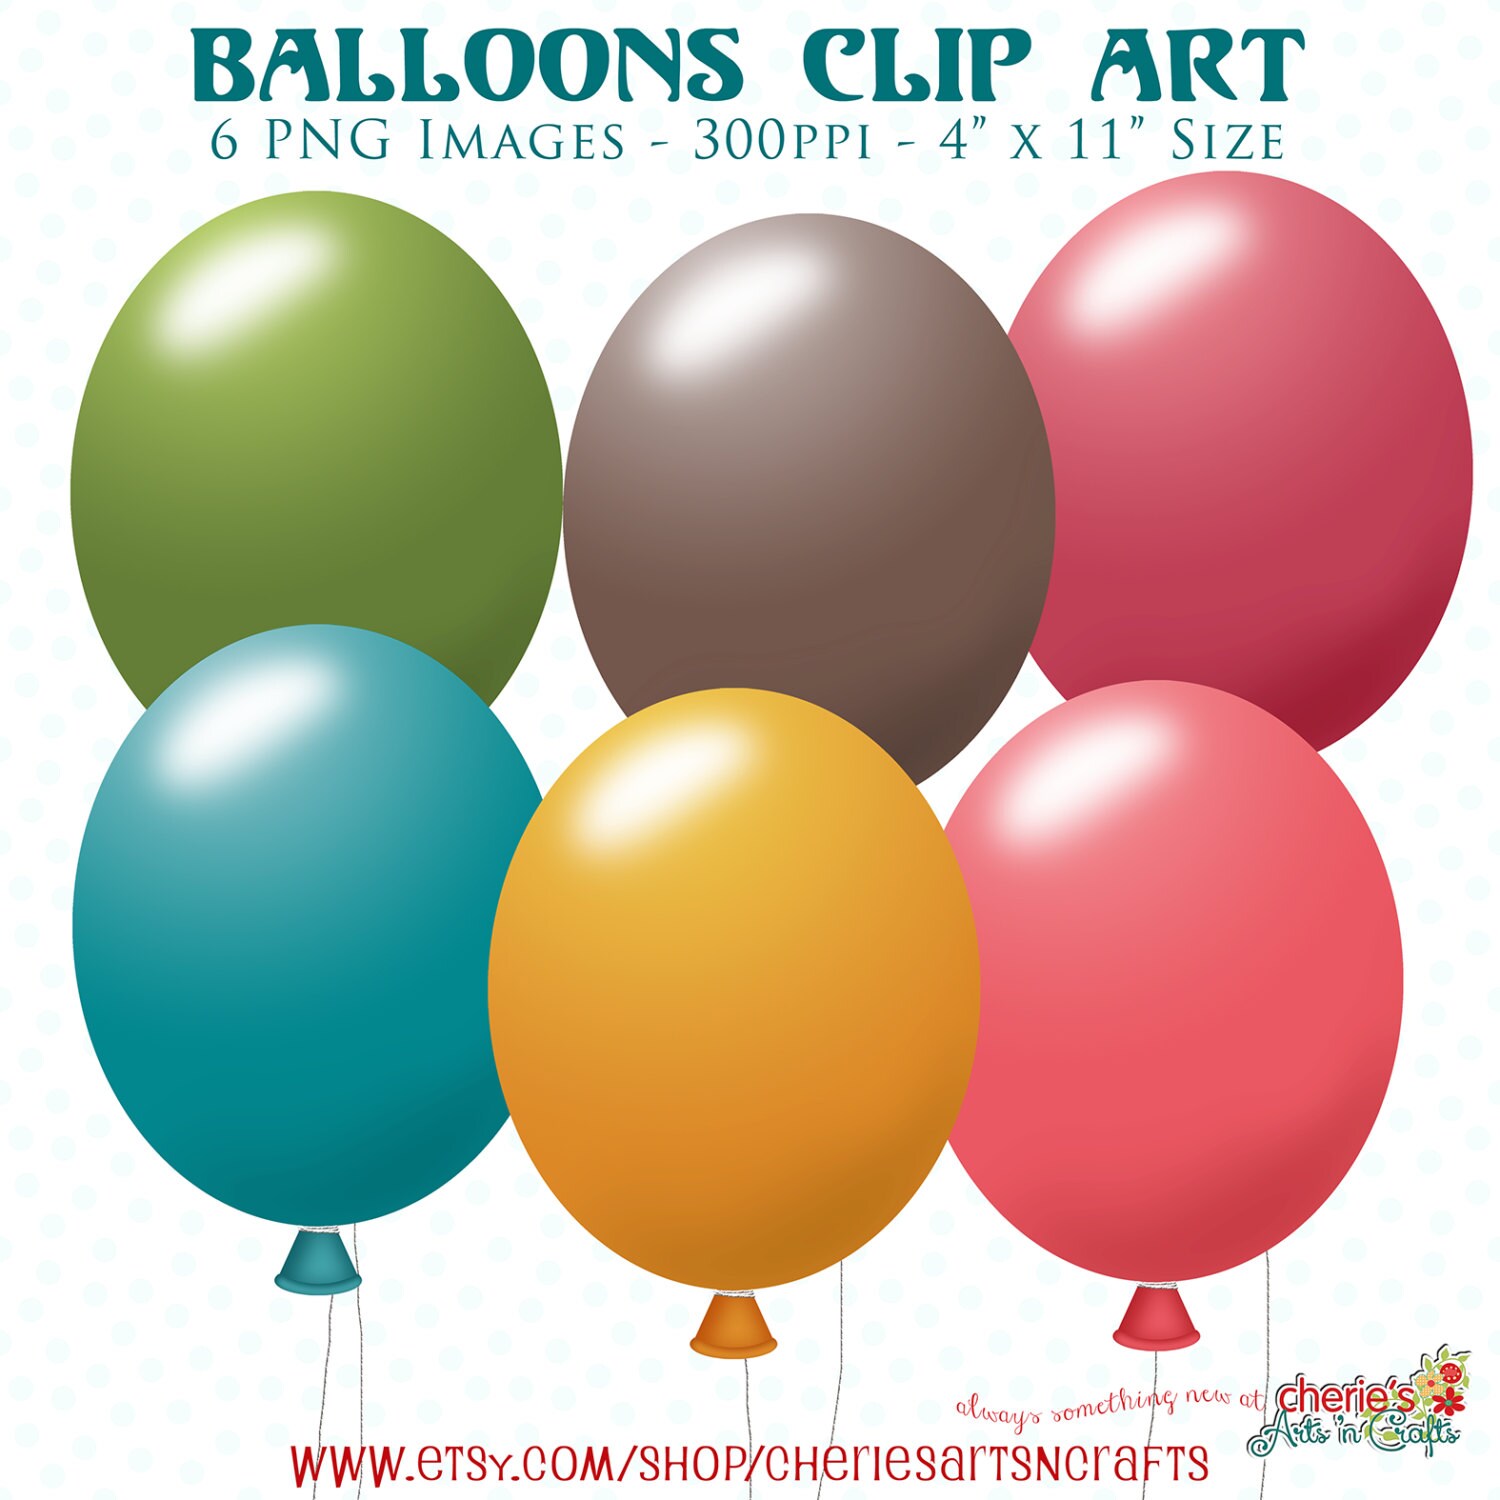 Balloons Clip Art 6 PNG Balloon Images Digital Scrapbooking